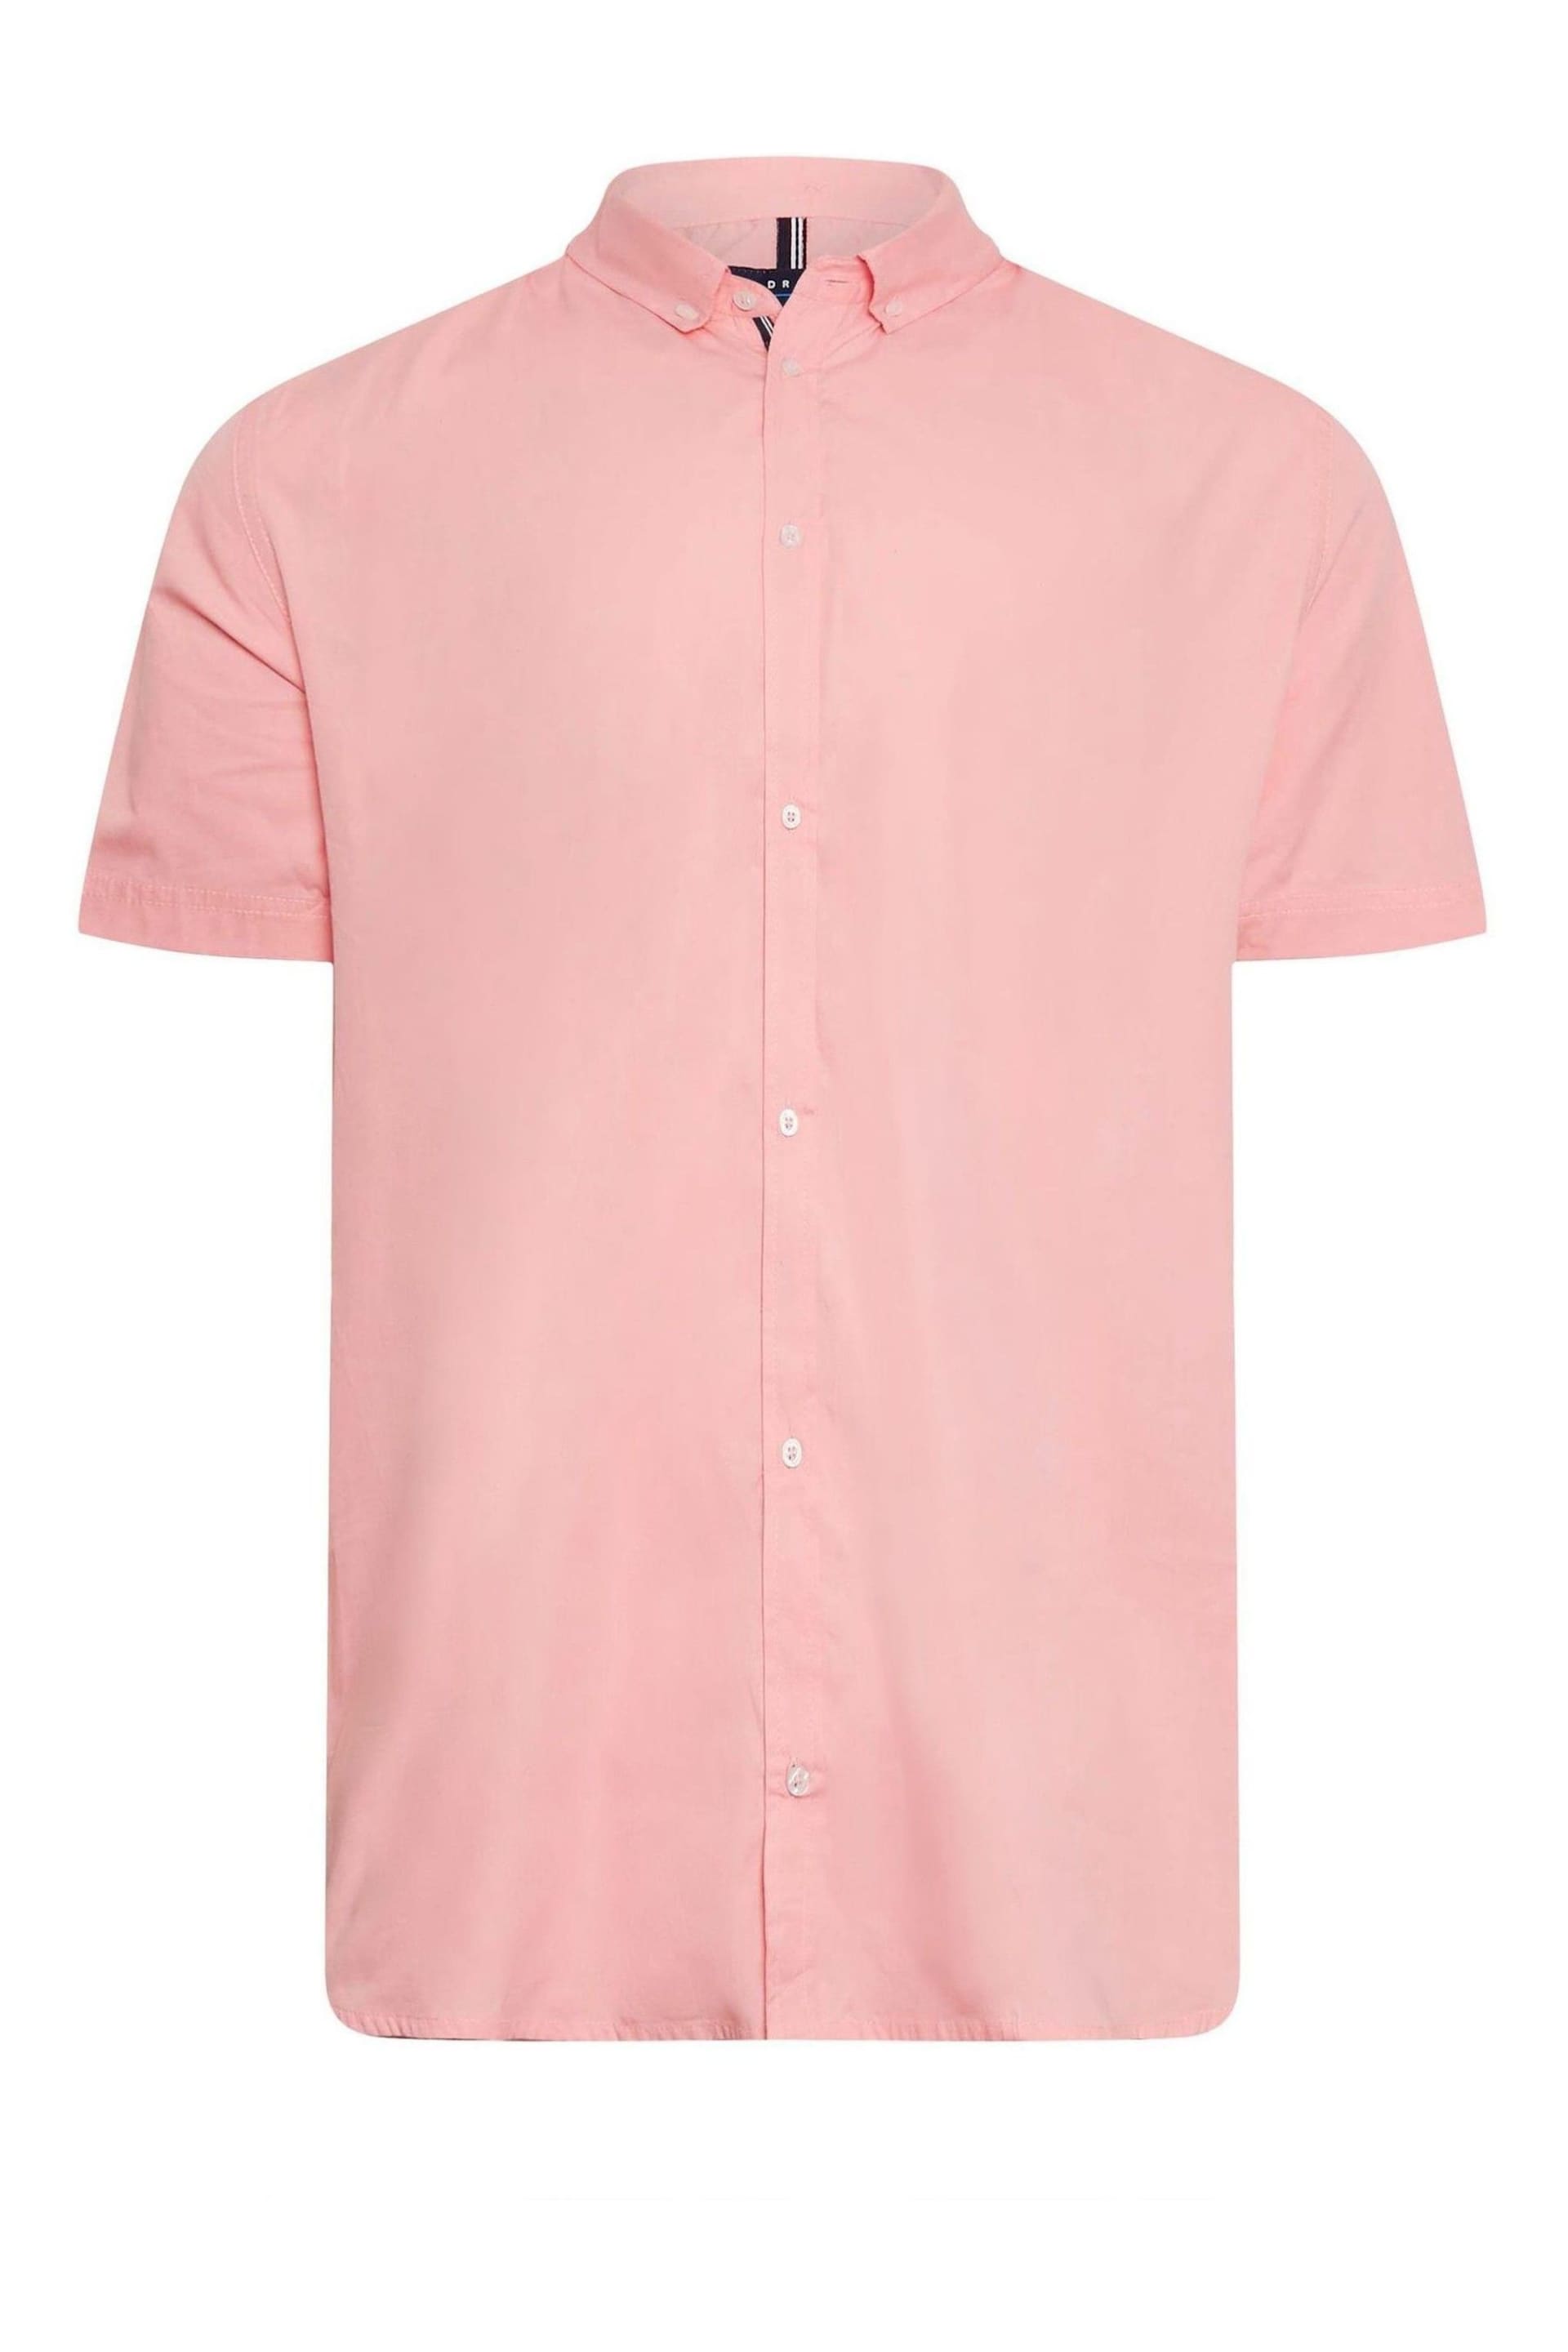 BadRhino Big & Tall Pink Short Sleeve Poplin Shirt - Image 2 of 3